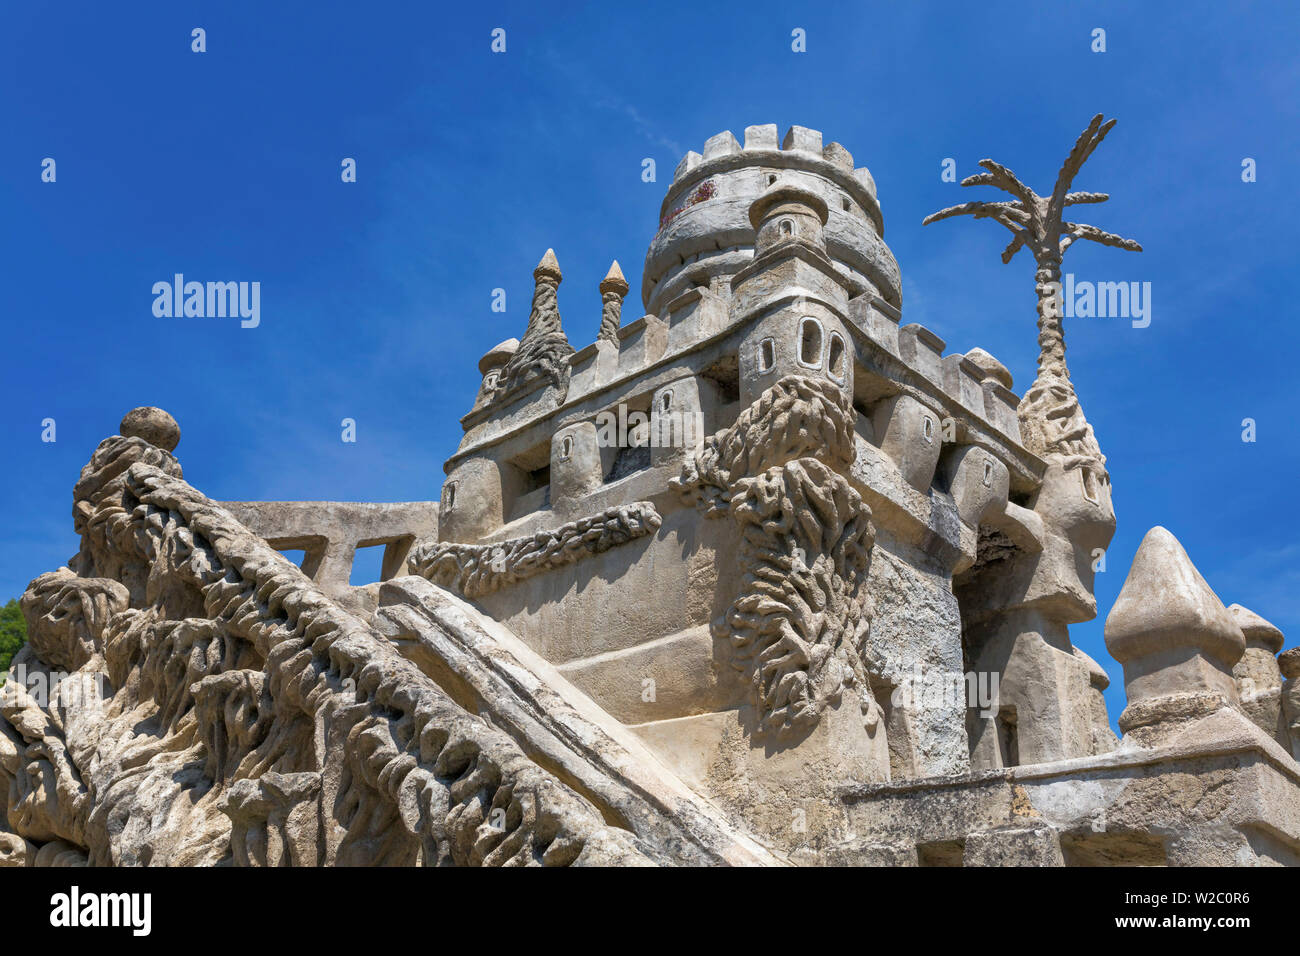 Le Palais ideale, Palazzo ideale da Ferdinand Cheval, Hauterives, dipartimento Drome, Francia Foto Stock